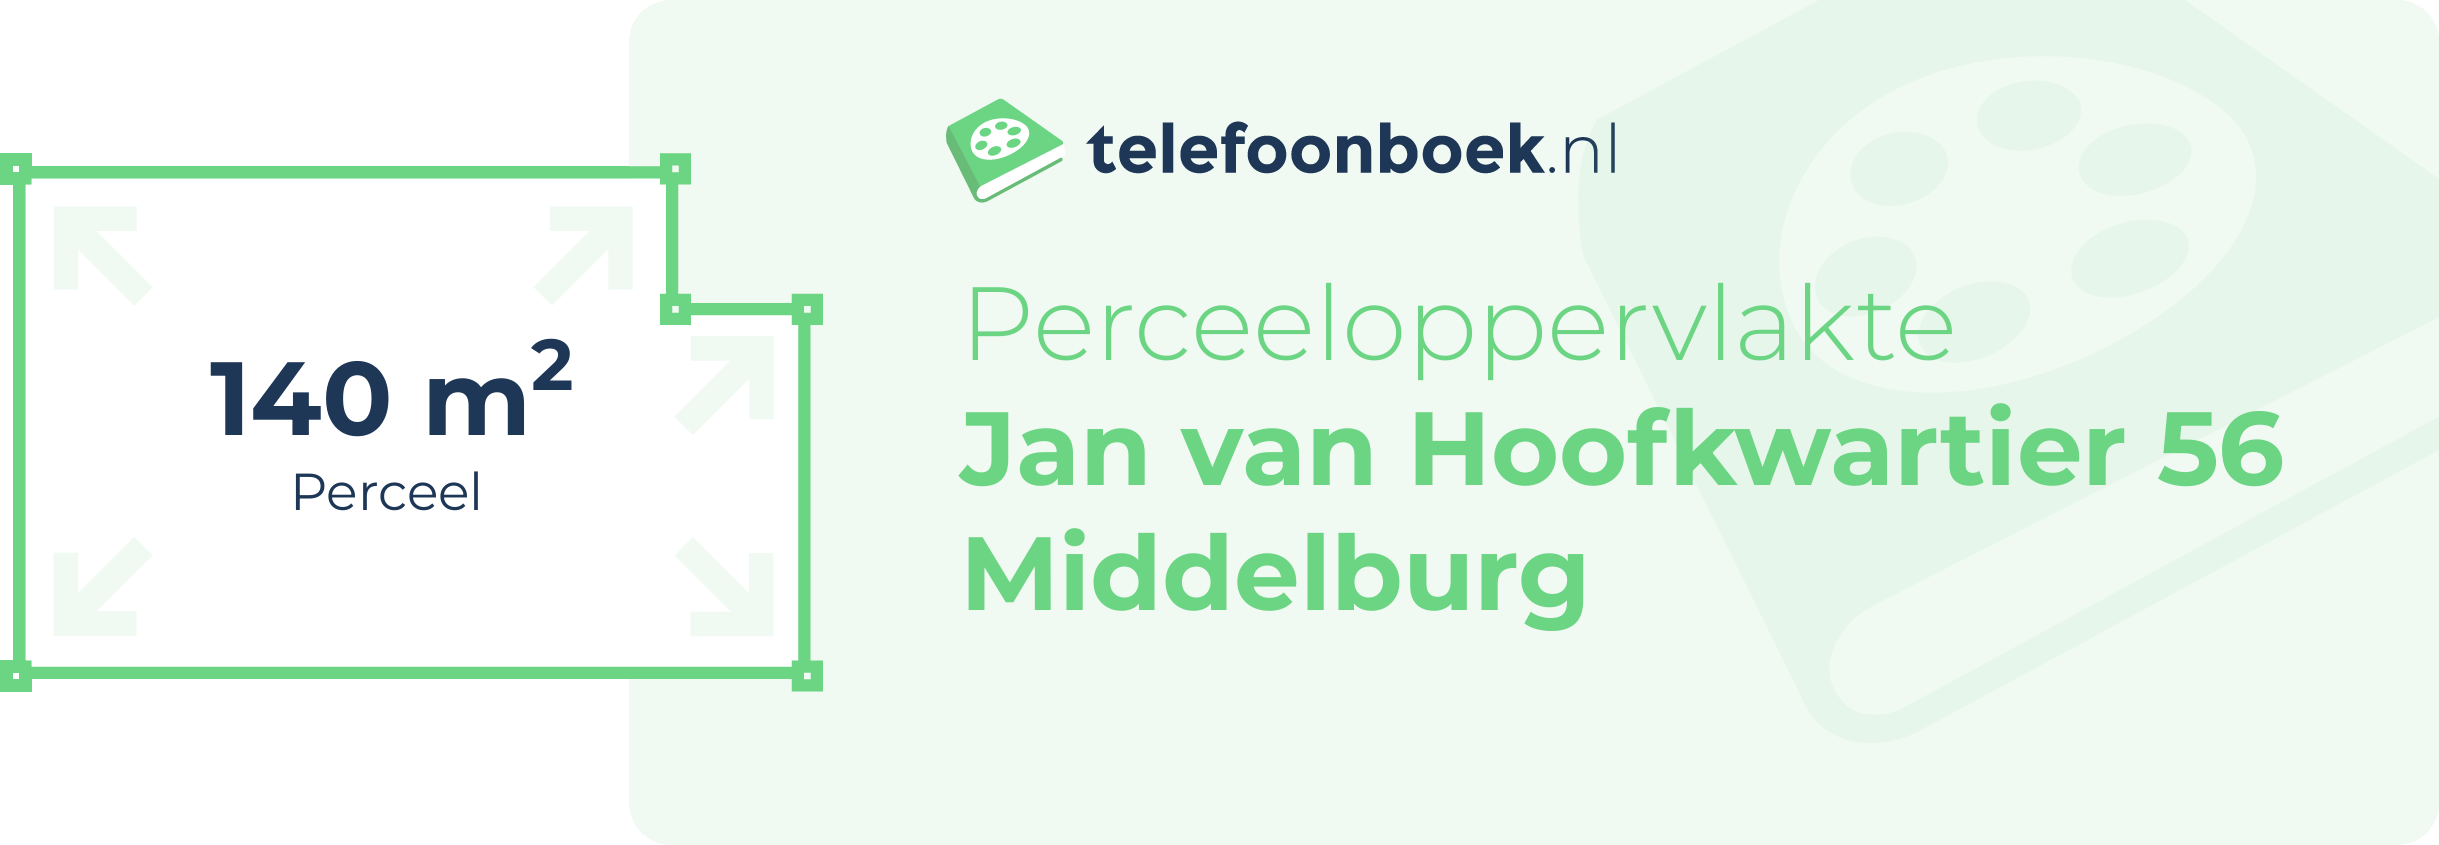 Perceeloppervlakte Jan Van Hoofkwartier 56 Middelburg